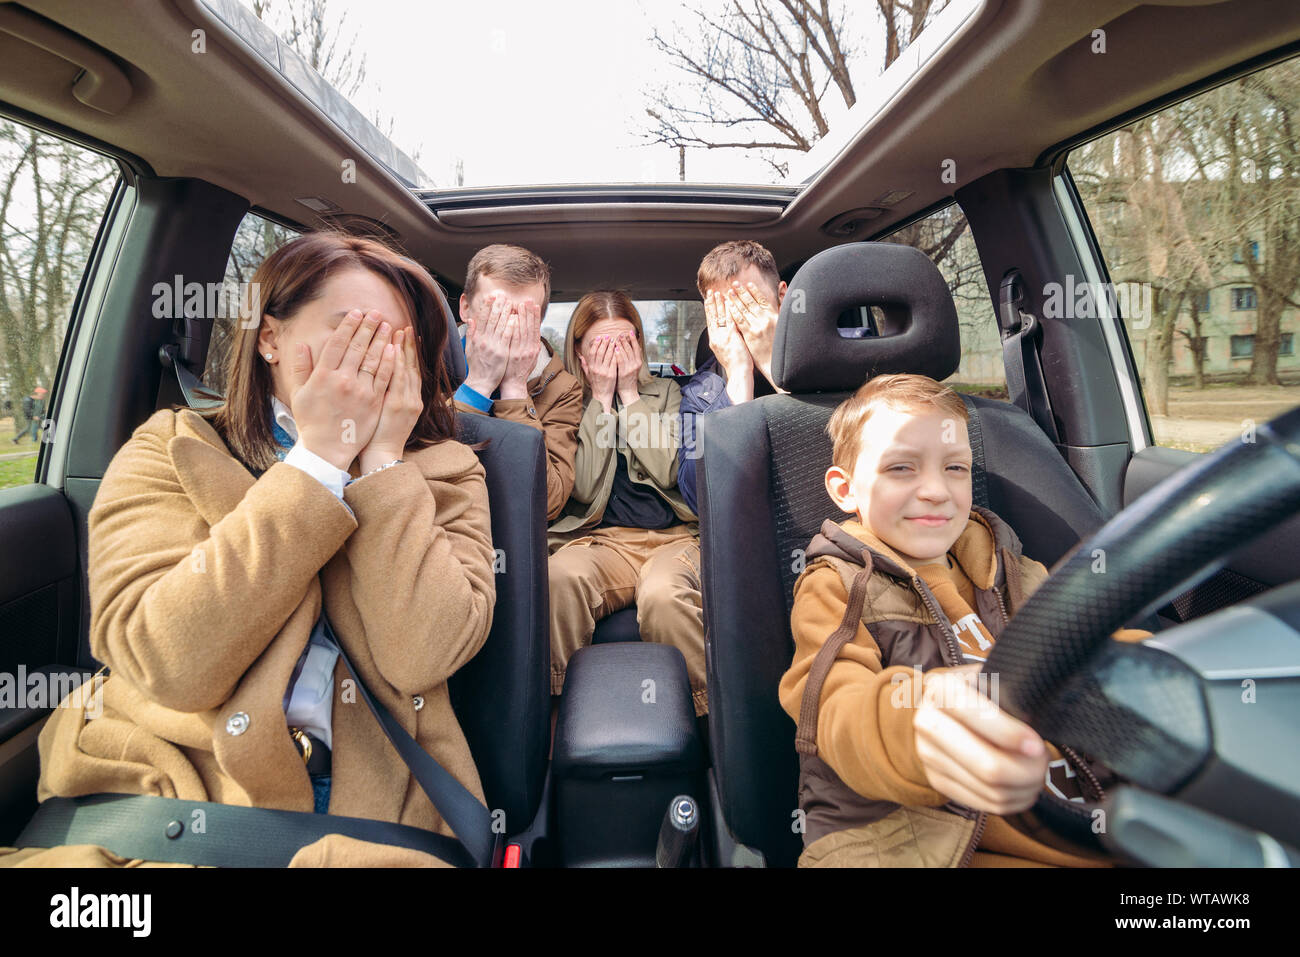 https://c8.alamy.com/comp/WTAWK8/car-travel-fun-concept-little-boy-driving-car-with-adults-people-unconfident-driver-WTAWK8.jpg